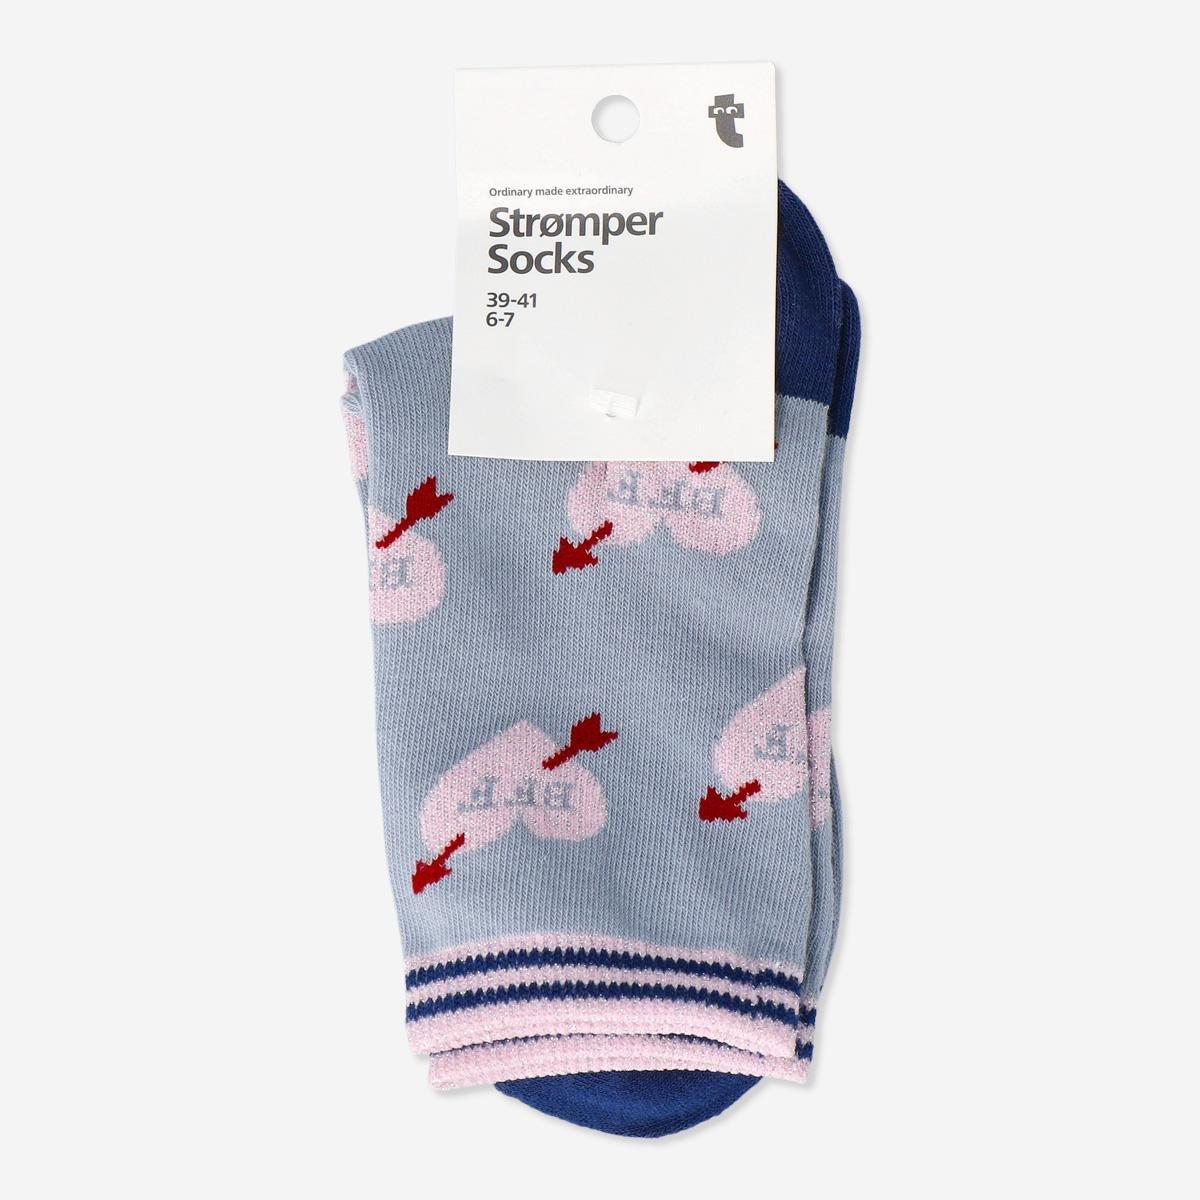 Multicolour socks. 39-41